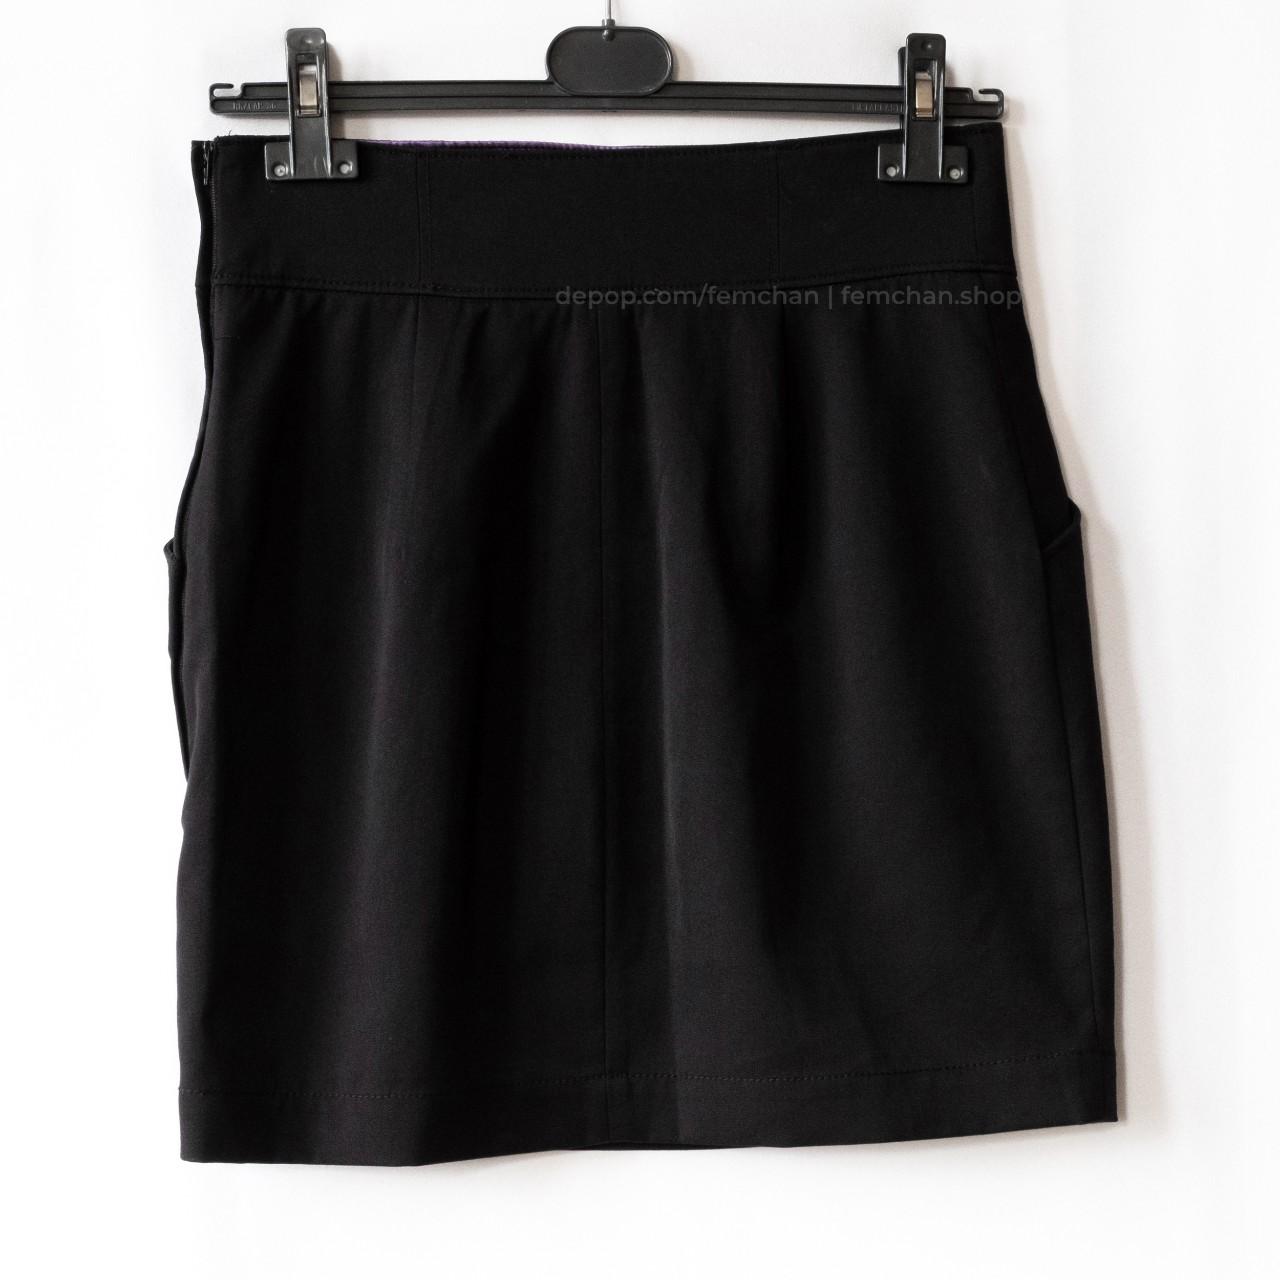 Black high-waisted tulip skirt with button details,... - Depop